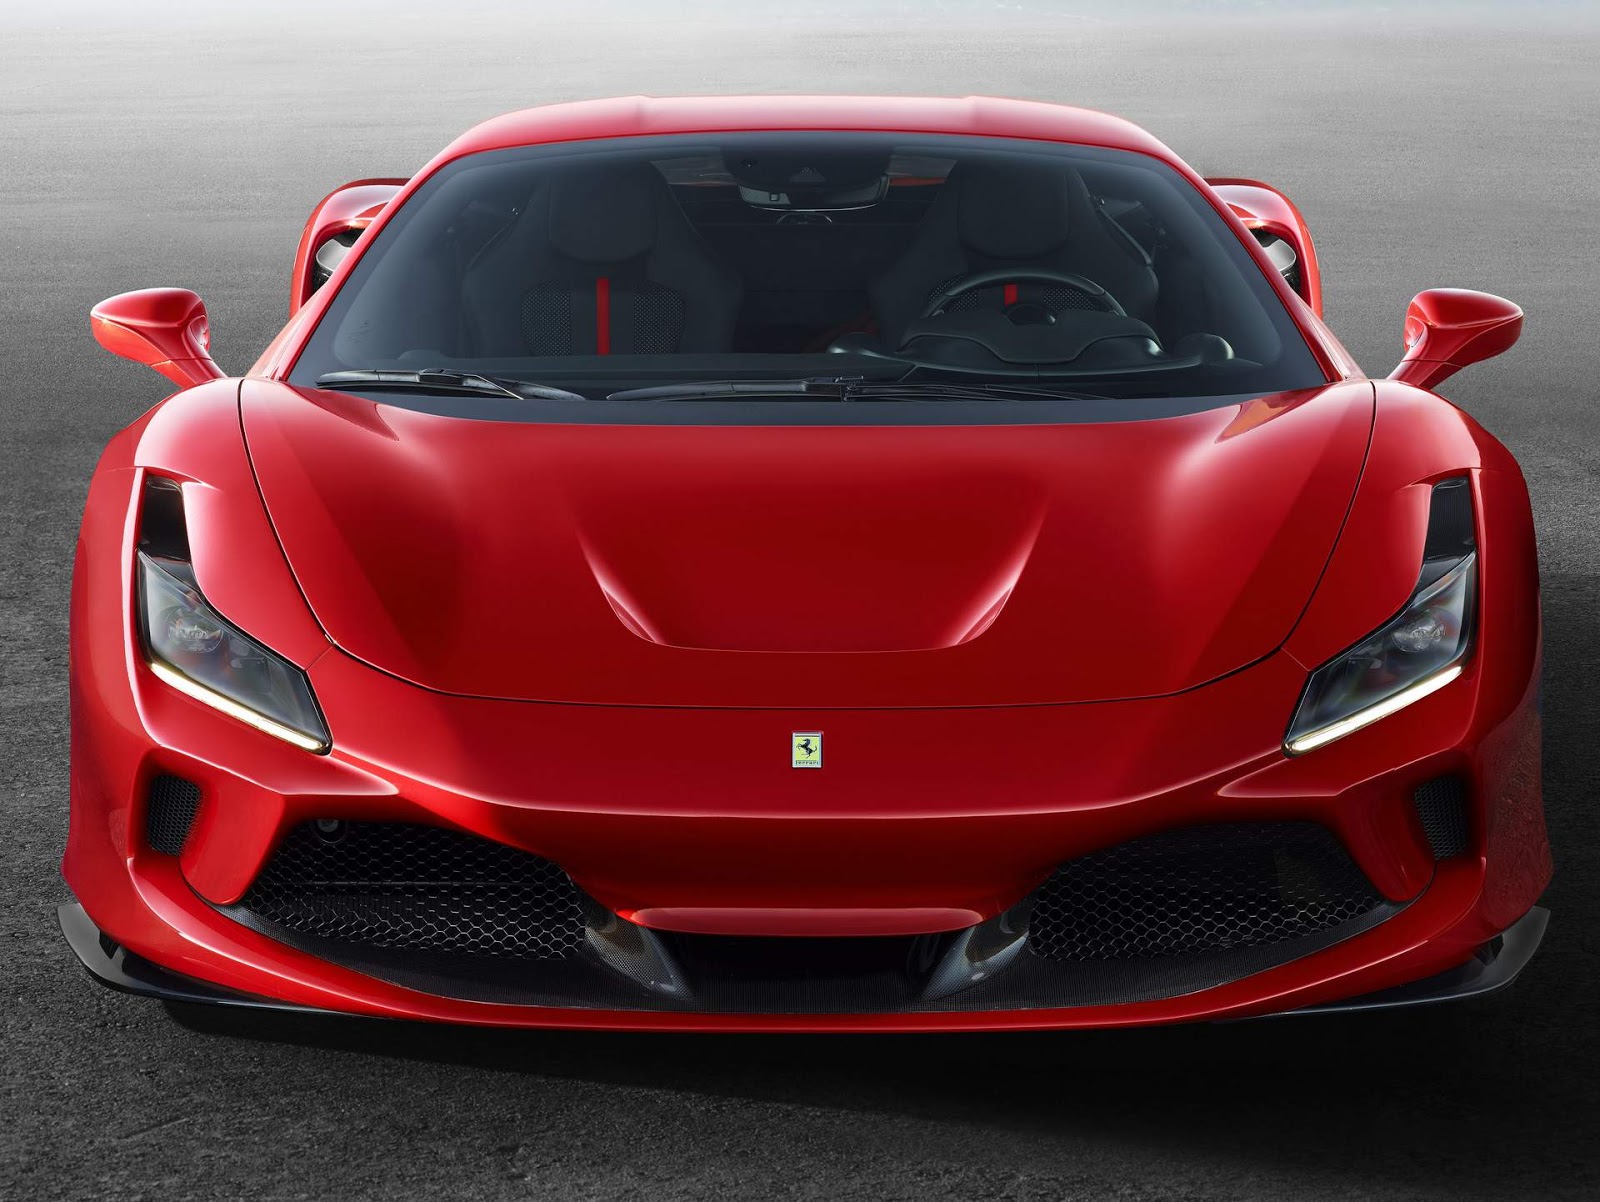 Ferrari F8 tabela fipe